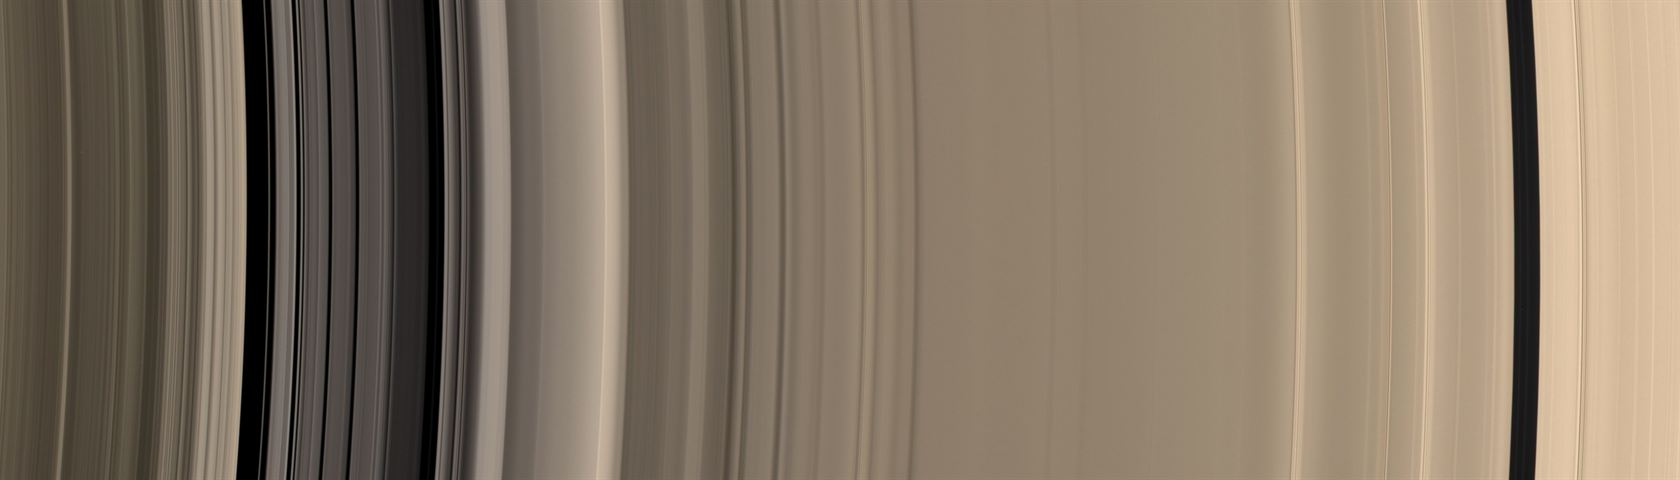 Saturn's Rings Close-Up